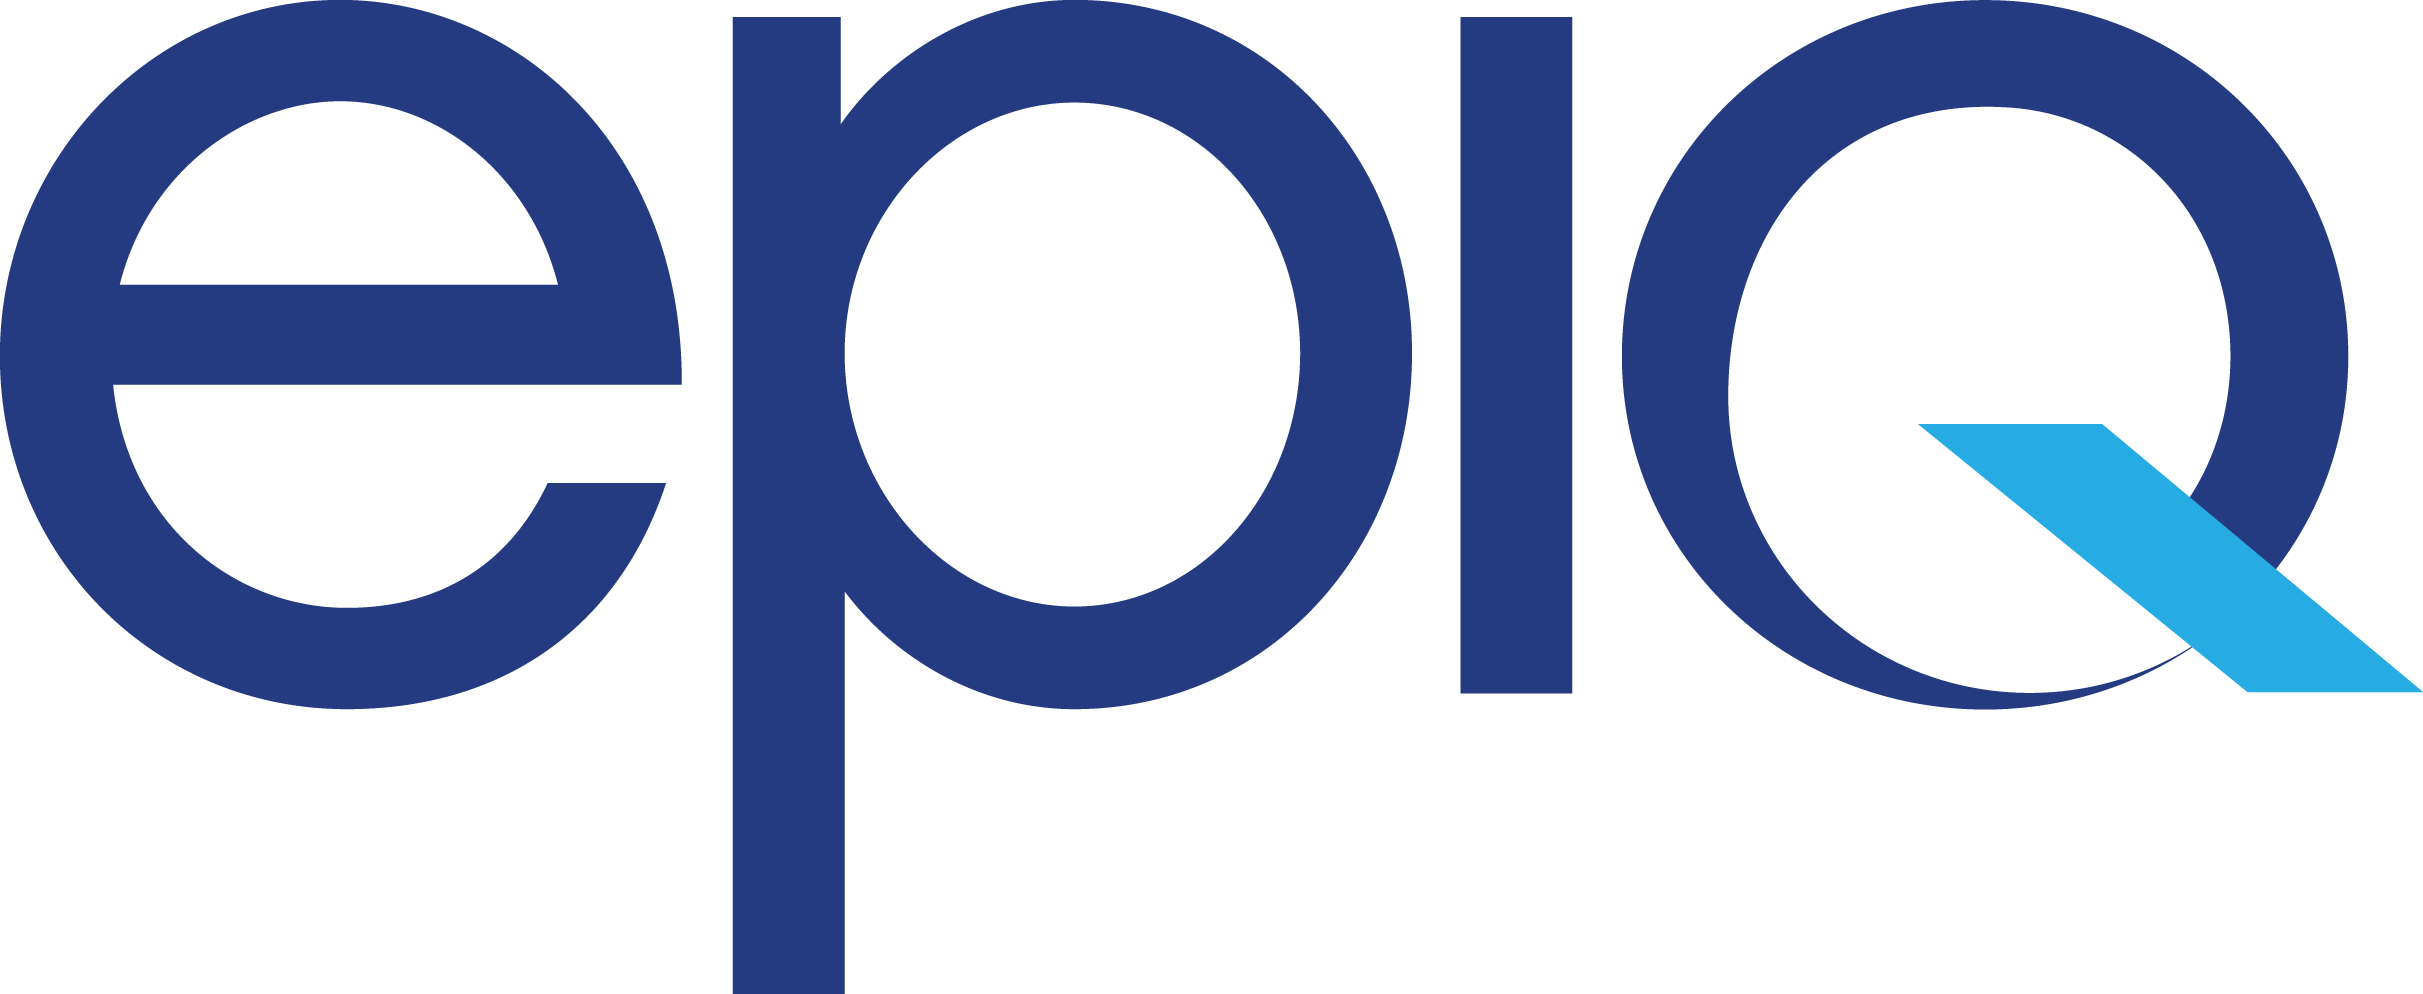 1150 Epiq Systems Limited logo